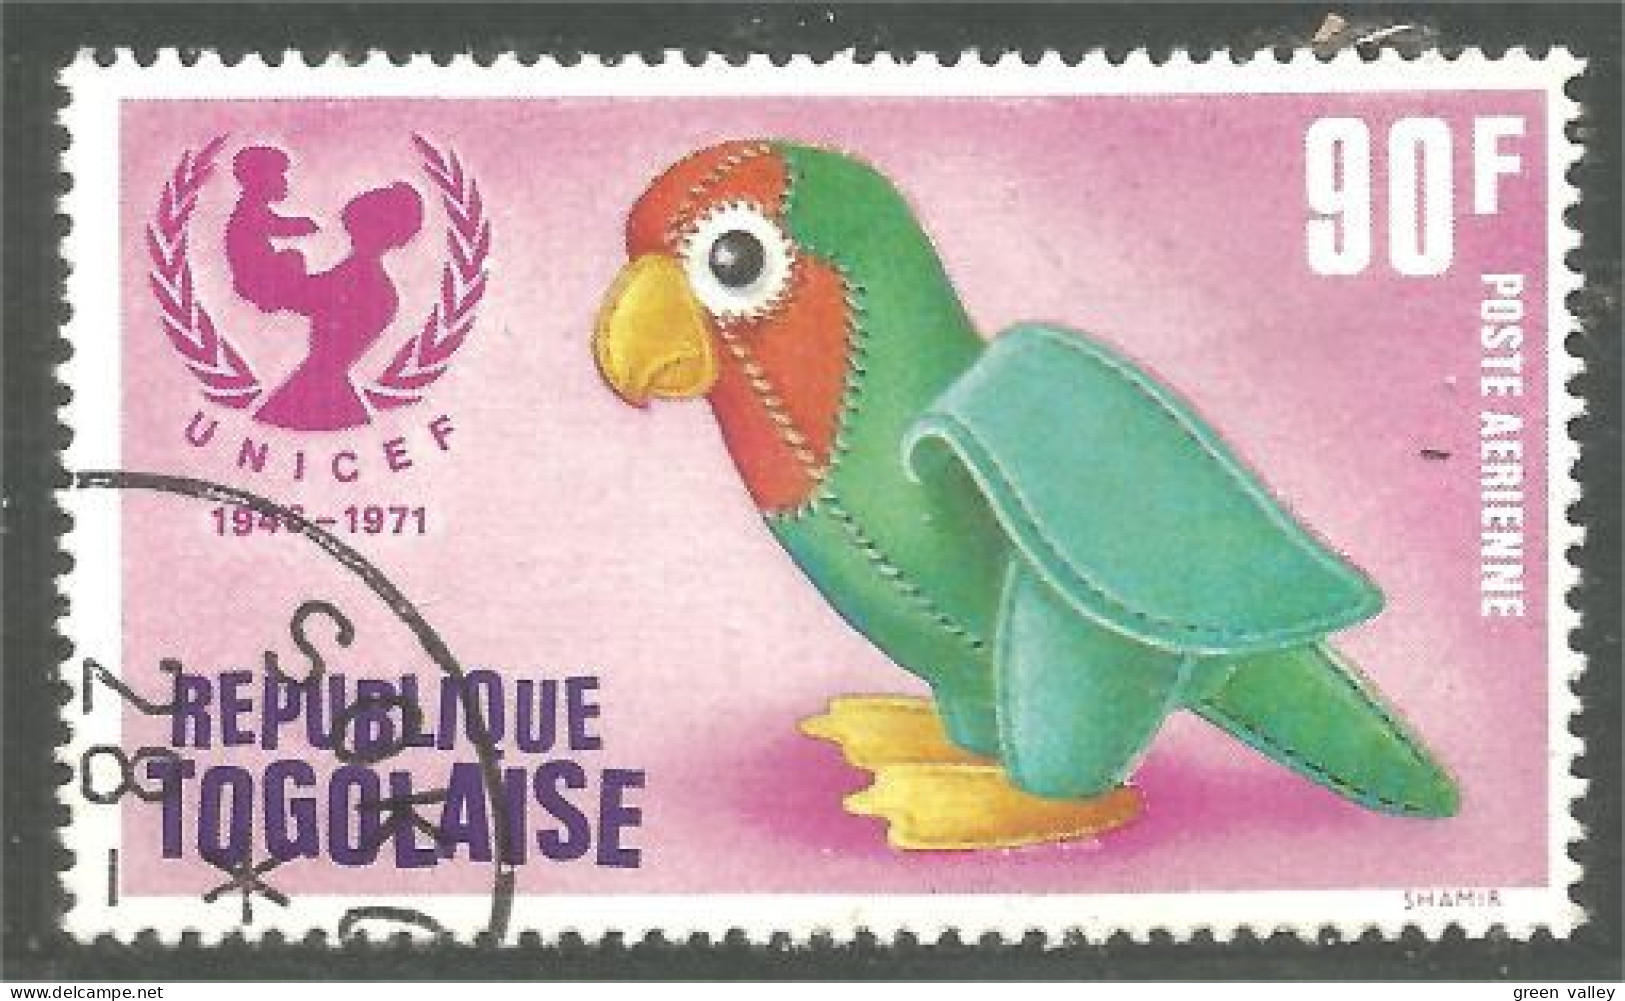 XW01-2270 Togo Perroquet Parrot Papagei UNICEF Oiseau Bird Vogel Uccello Pappagallo Loro Jouet Toy - Papagayos